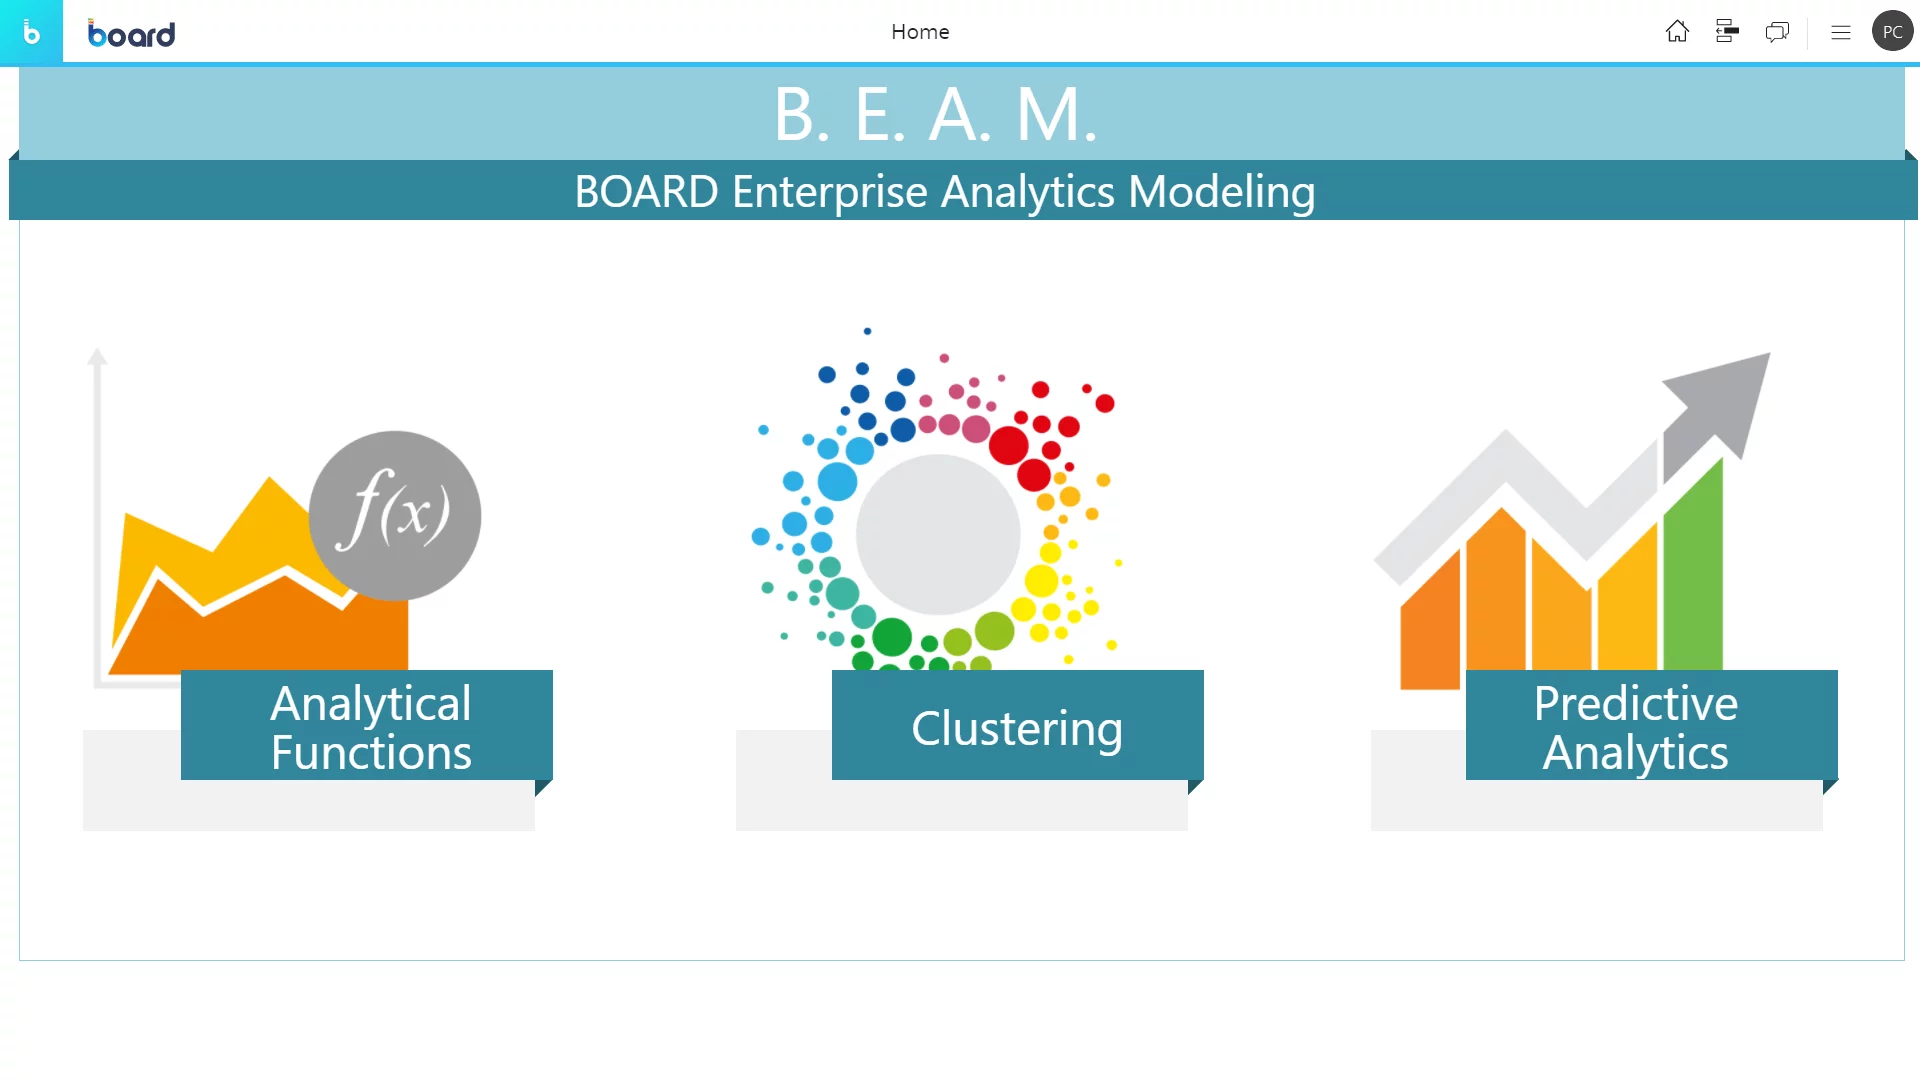 The key capabilities of Board Enterprise Analytics Modeling